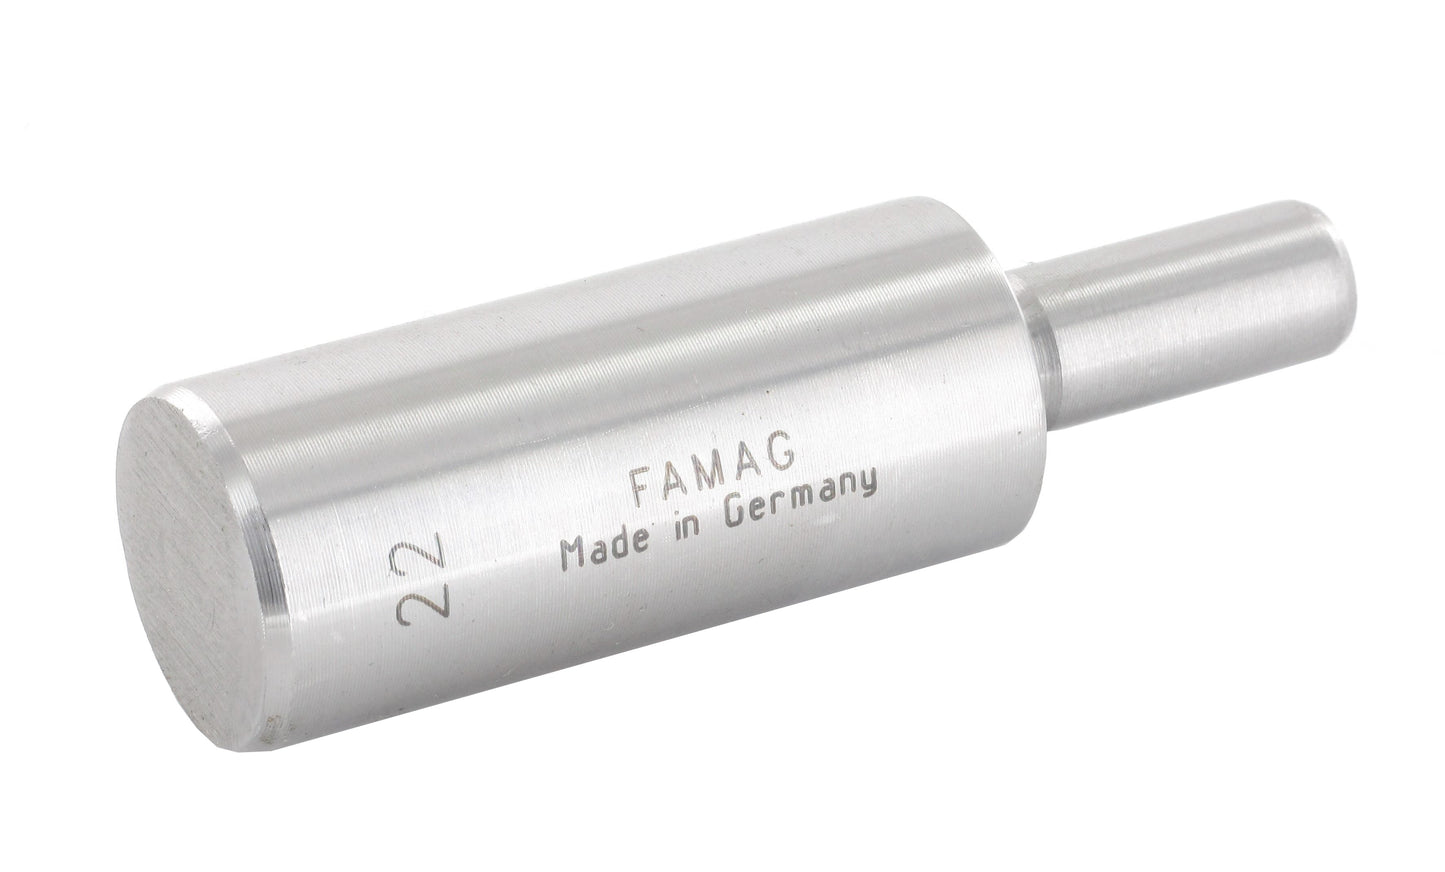 FAMAG 16 mm Guding Pin For Bormax 2.0 Prima 1614 Long Series 44.45mm - 120mm, 1619016